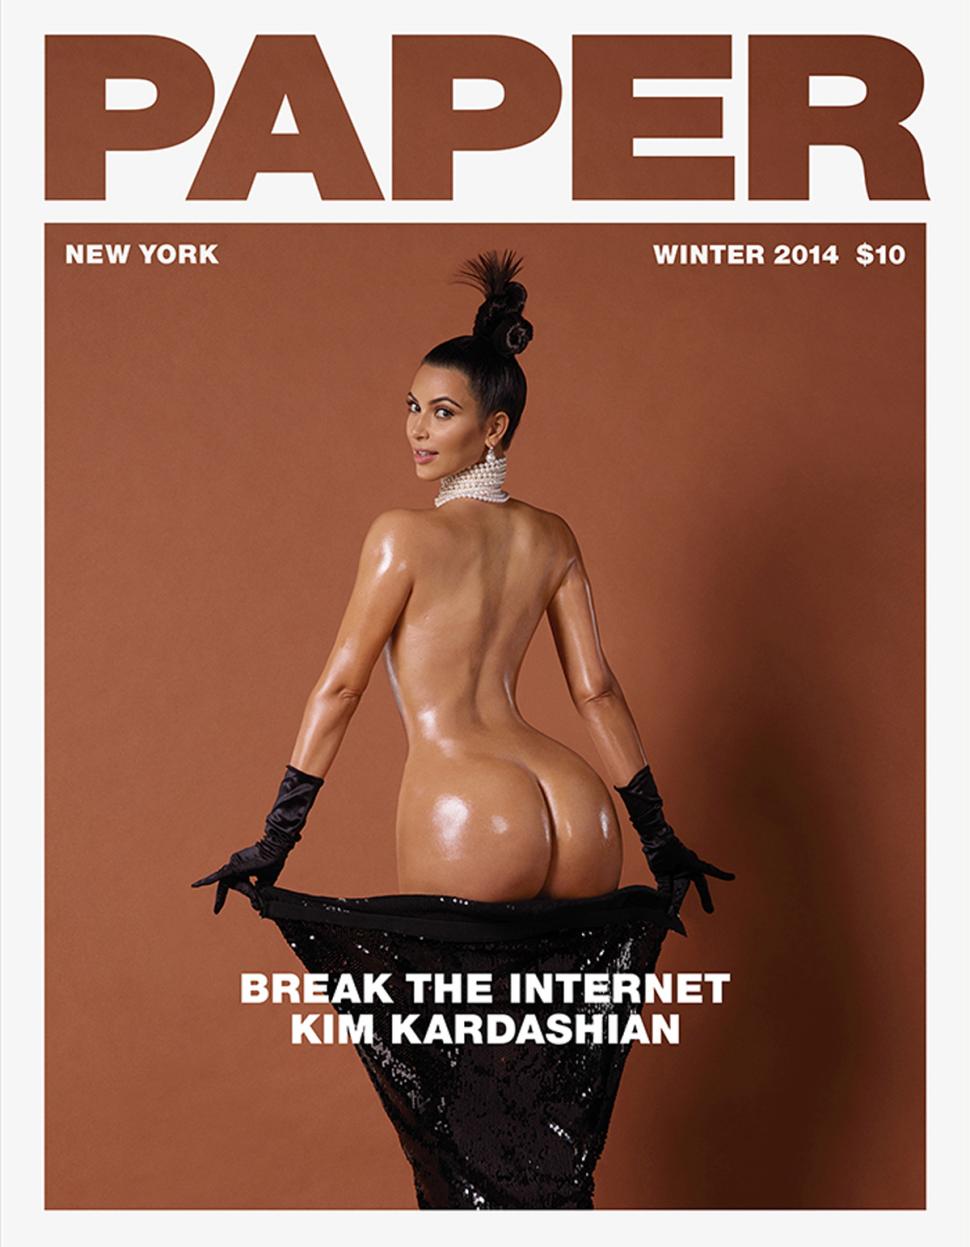 kardashian13f-1-web